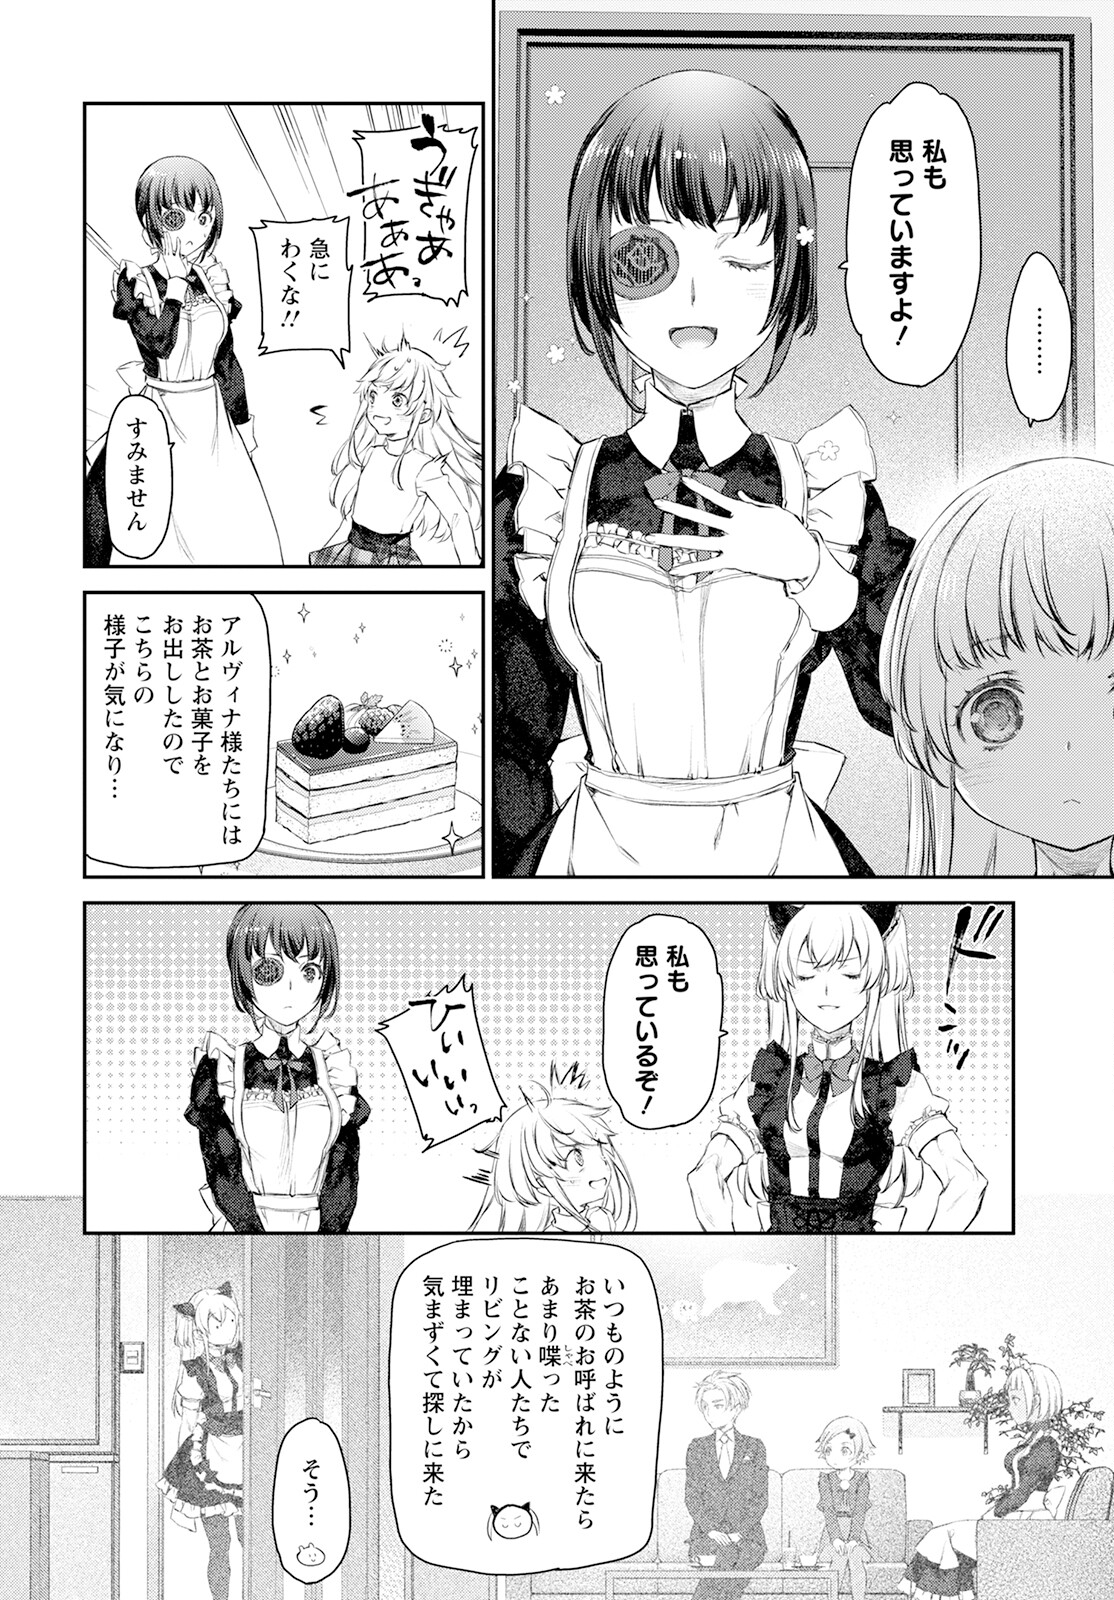 Uchi no Maid ga Uzasugiru! - Chapter 58 - Page 6